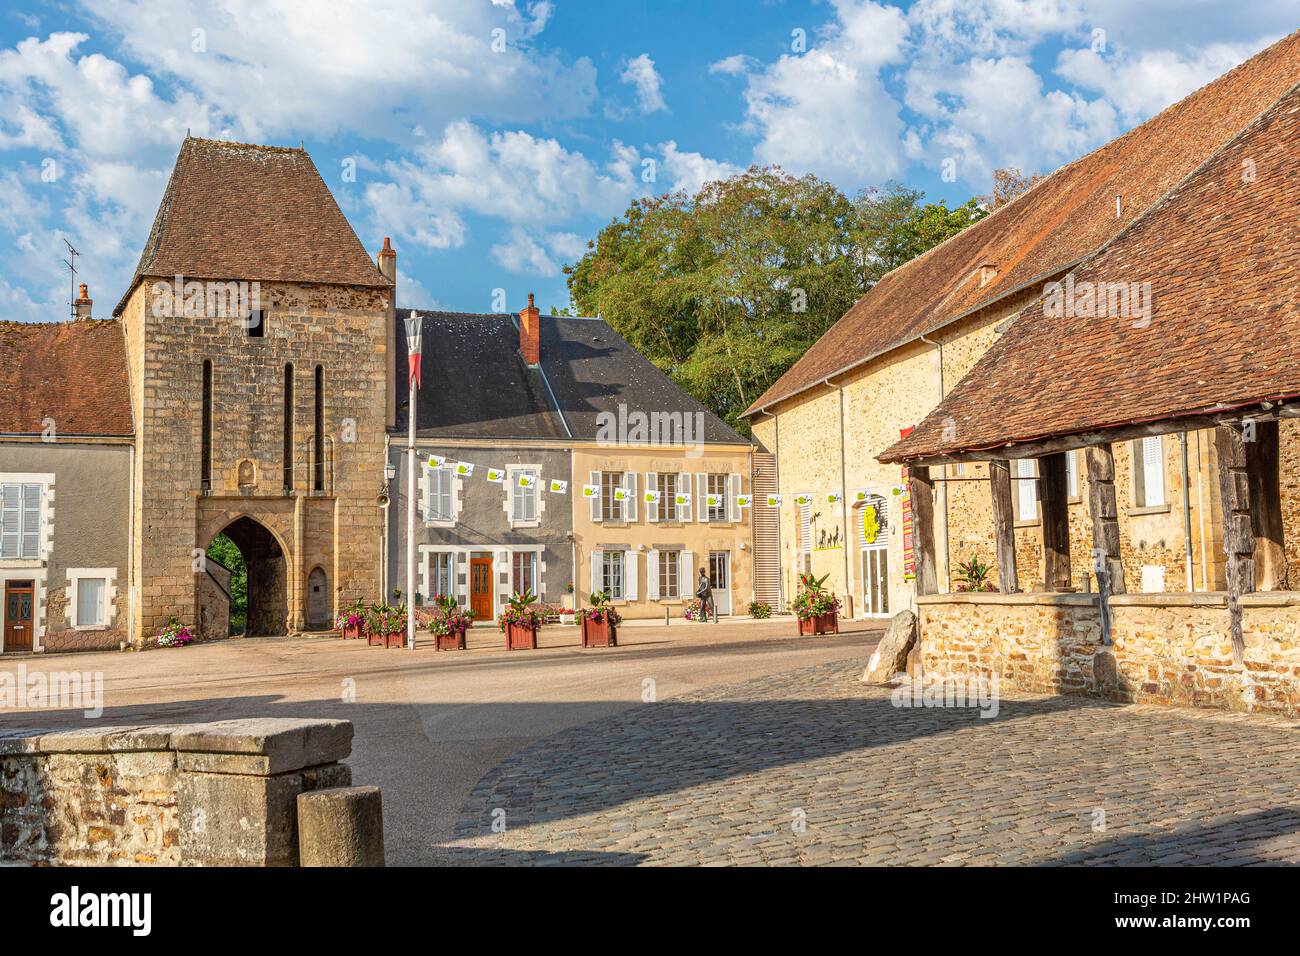 Frankreich, Indre, Sainte Severe sur Indre, Marche Square, Hall und Elemente erinnern an den Film Jour de Fete (der große Tag) von Jacques Tati Stockfoto